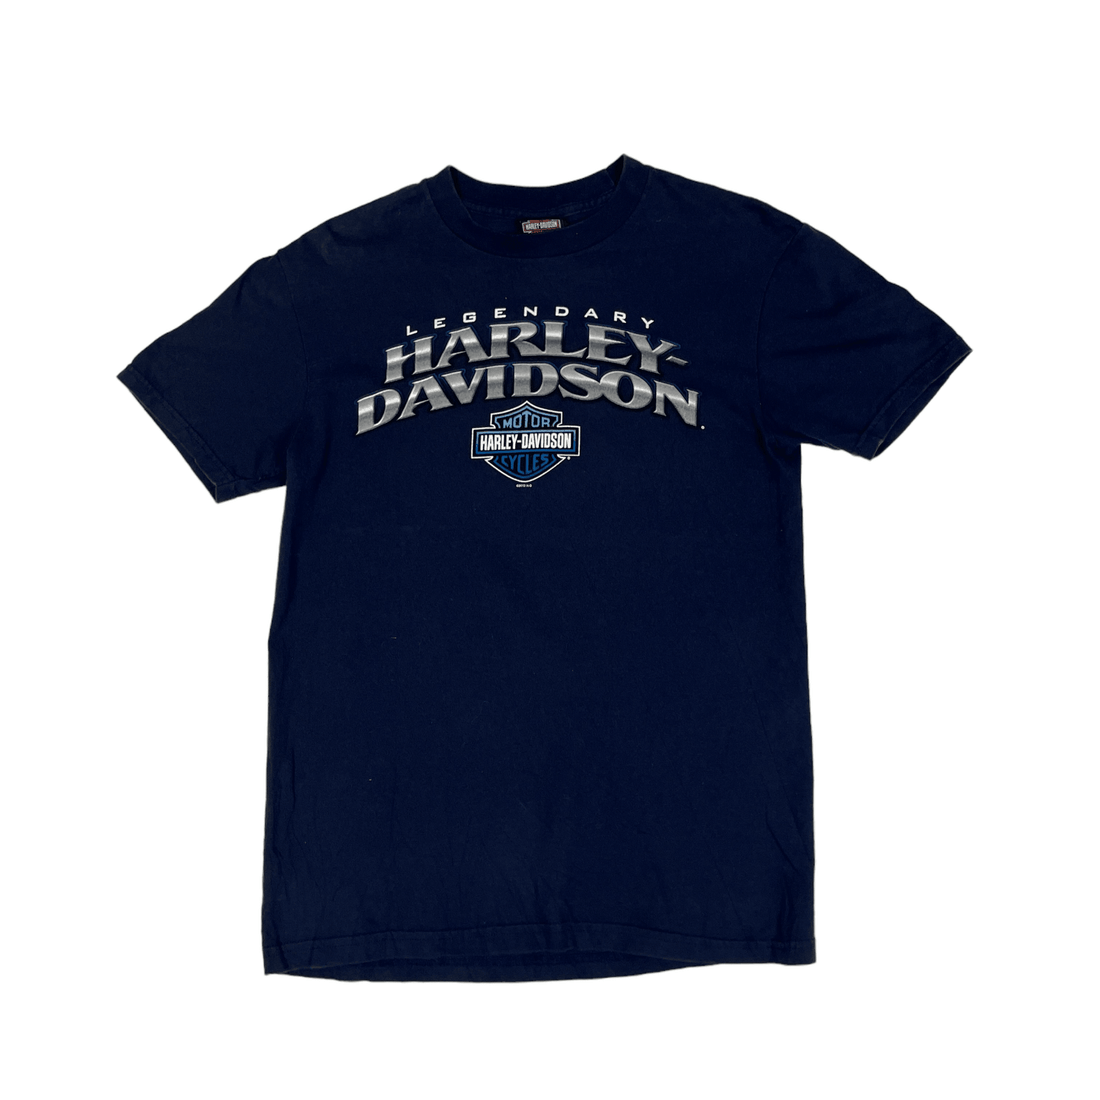 Vintage Blue Harley Davidson Tee - Medium - The Streetwear Studio